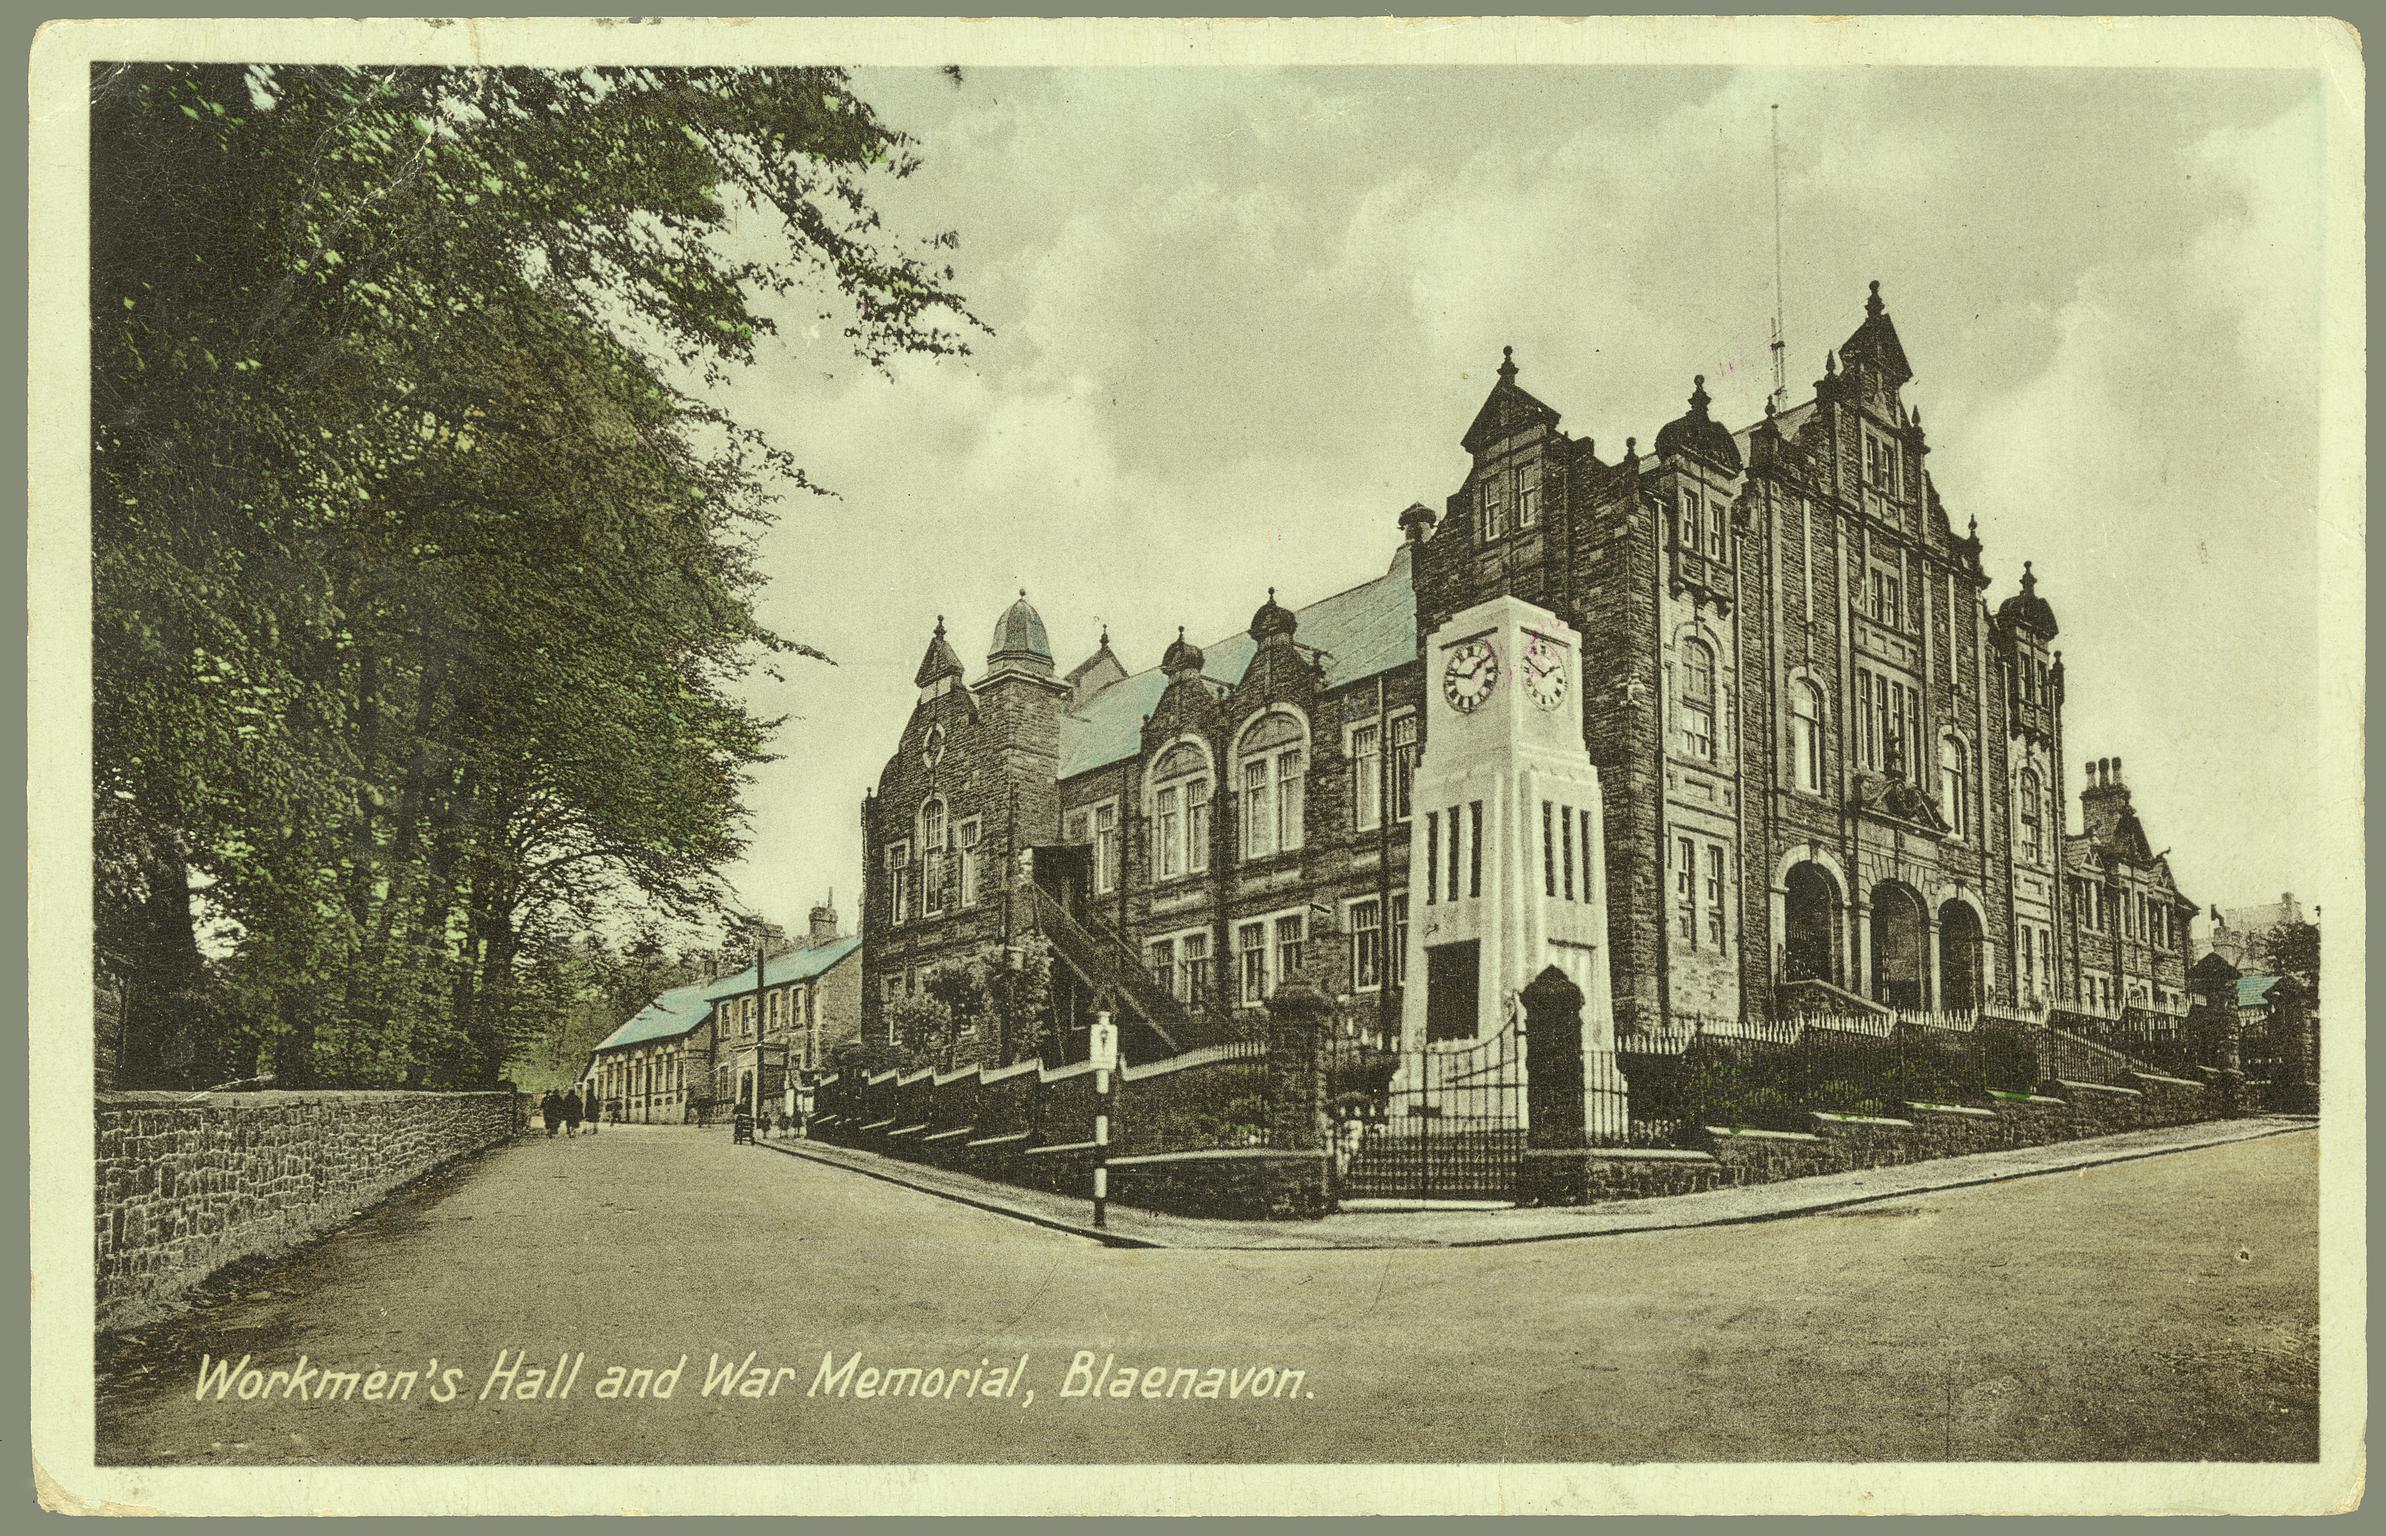 Workmen's Hall and War Memorial, Blaenavon (postcard)